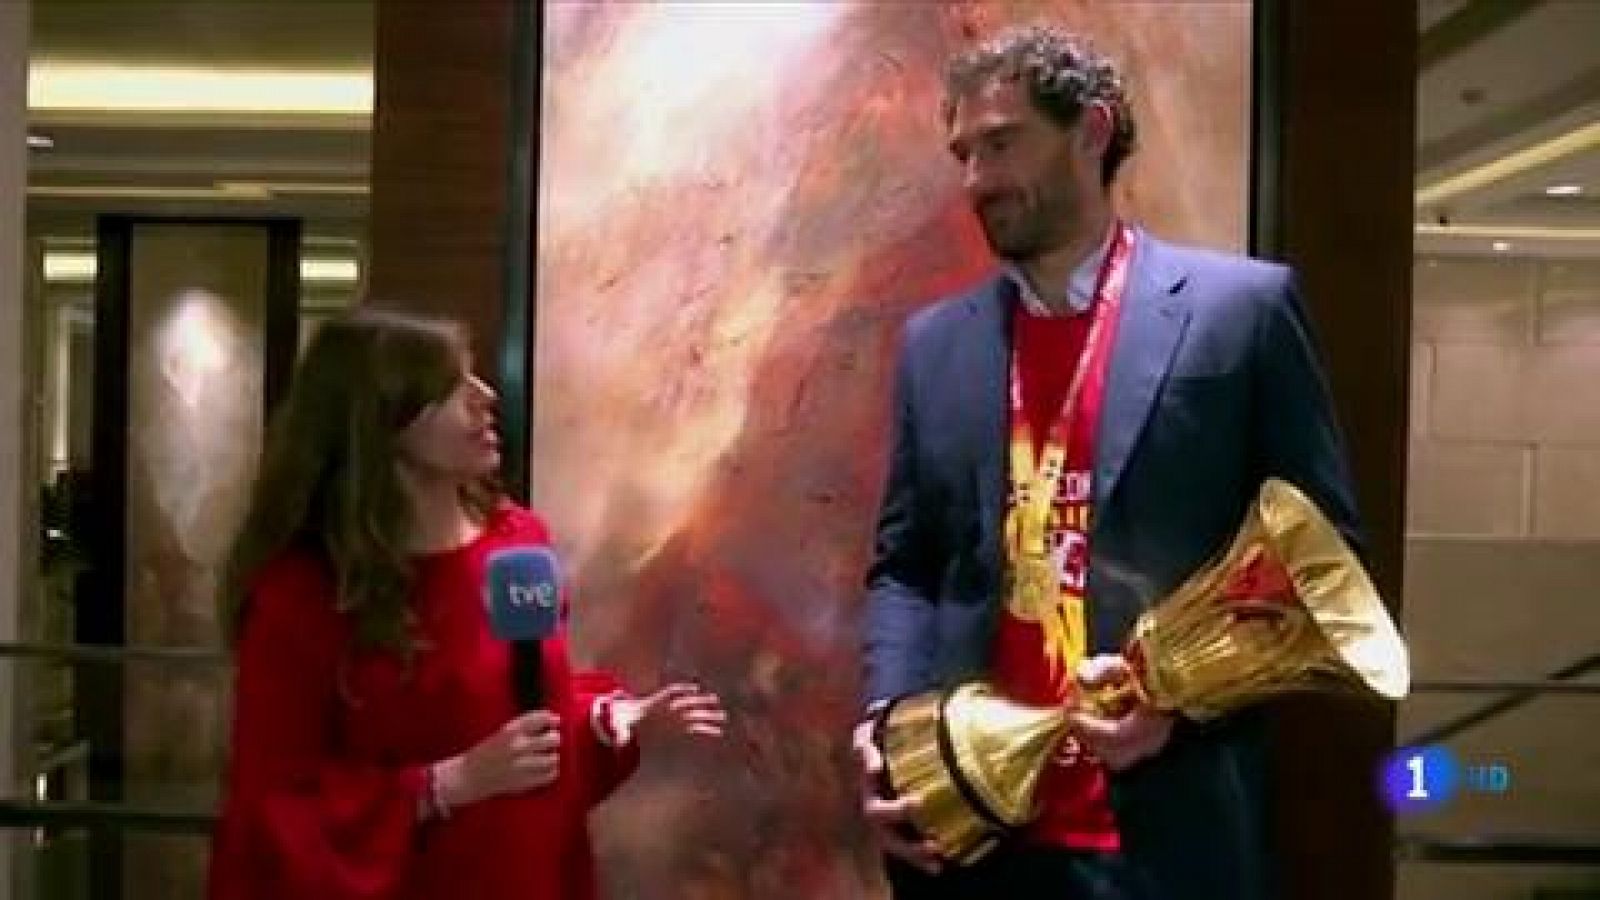 Final Mundial Baloncesto: Garbajosa: "Les he visto con una madurez tremenda" - RTVE.es